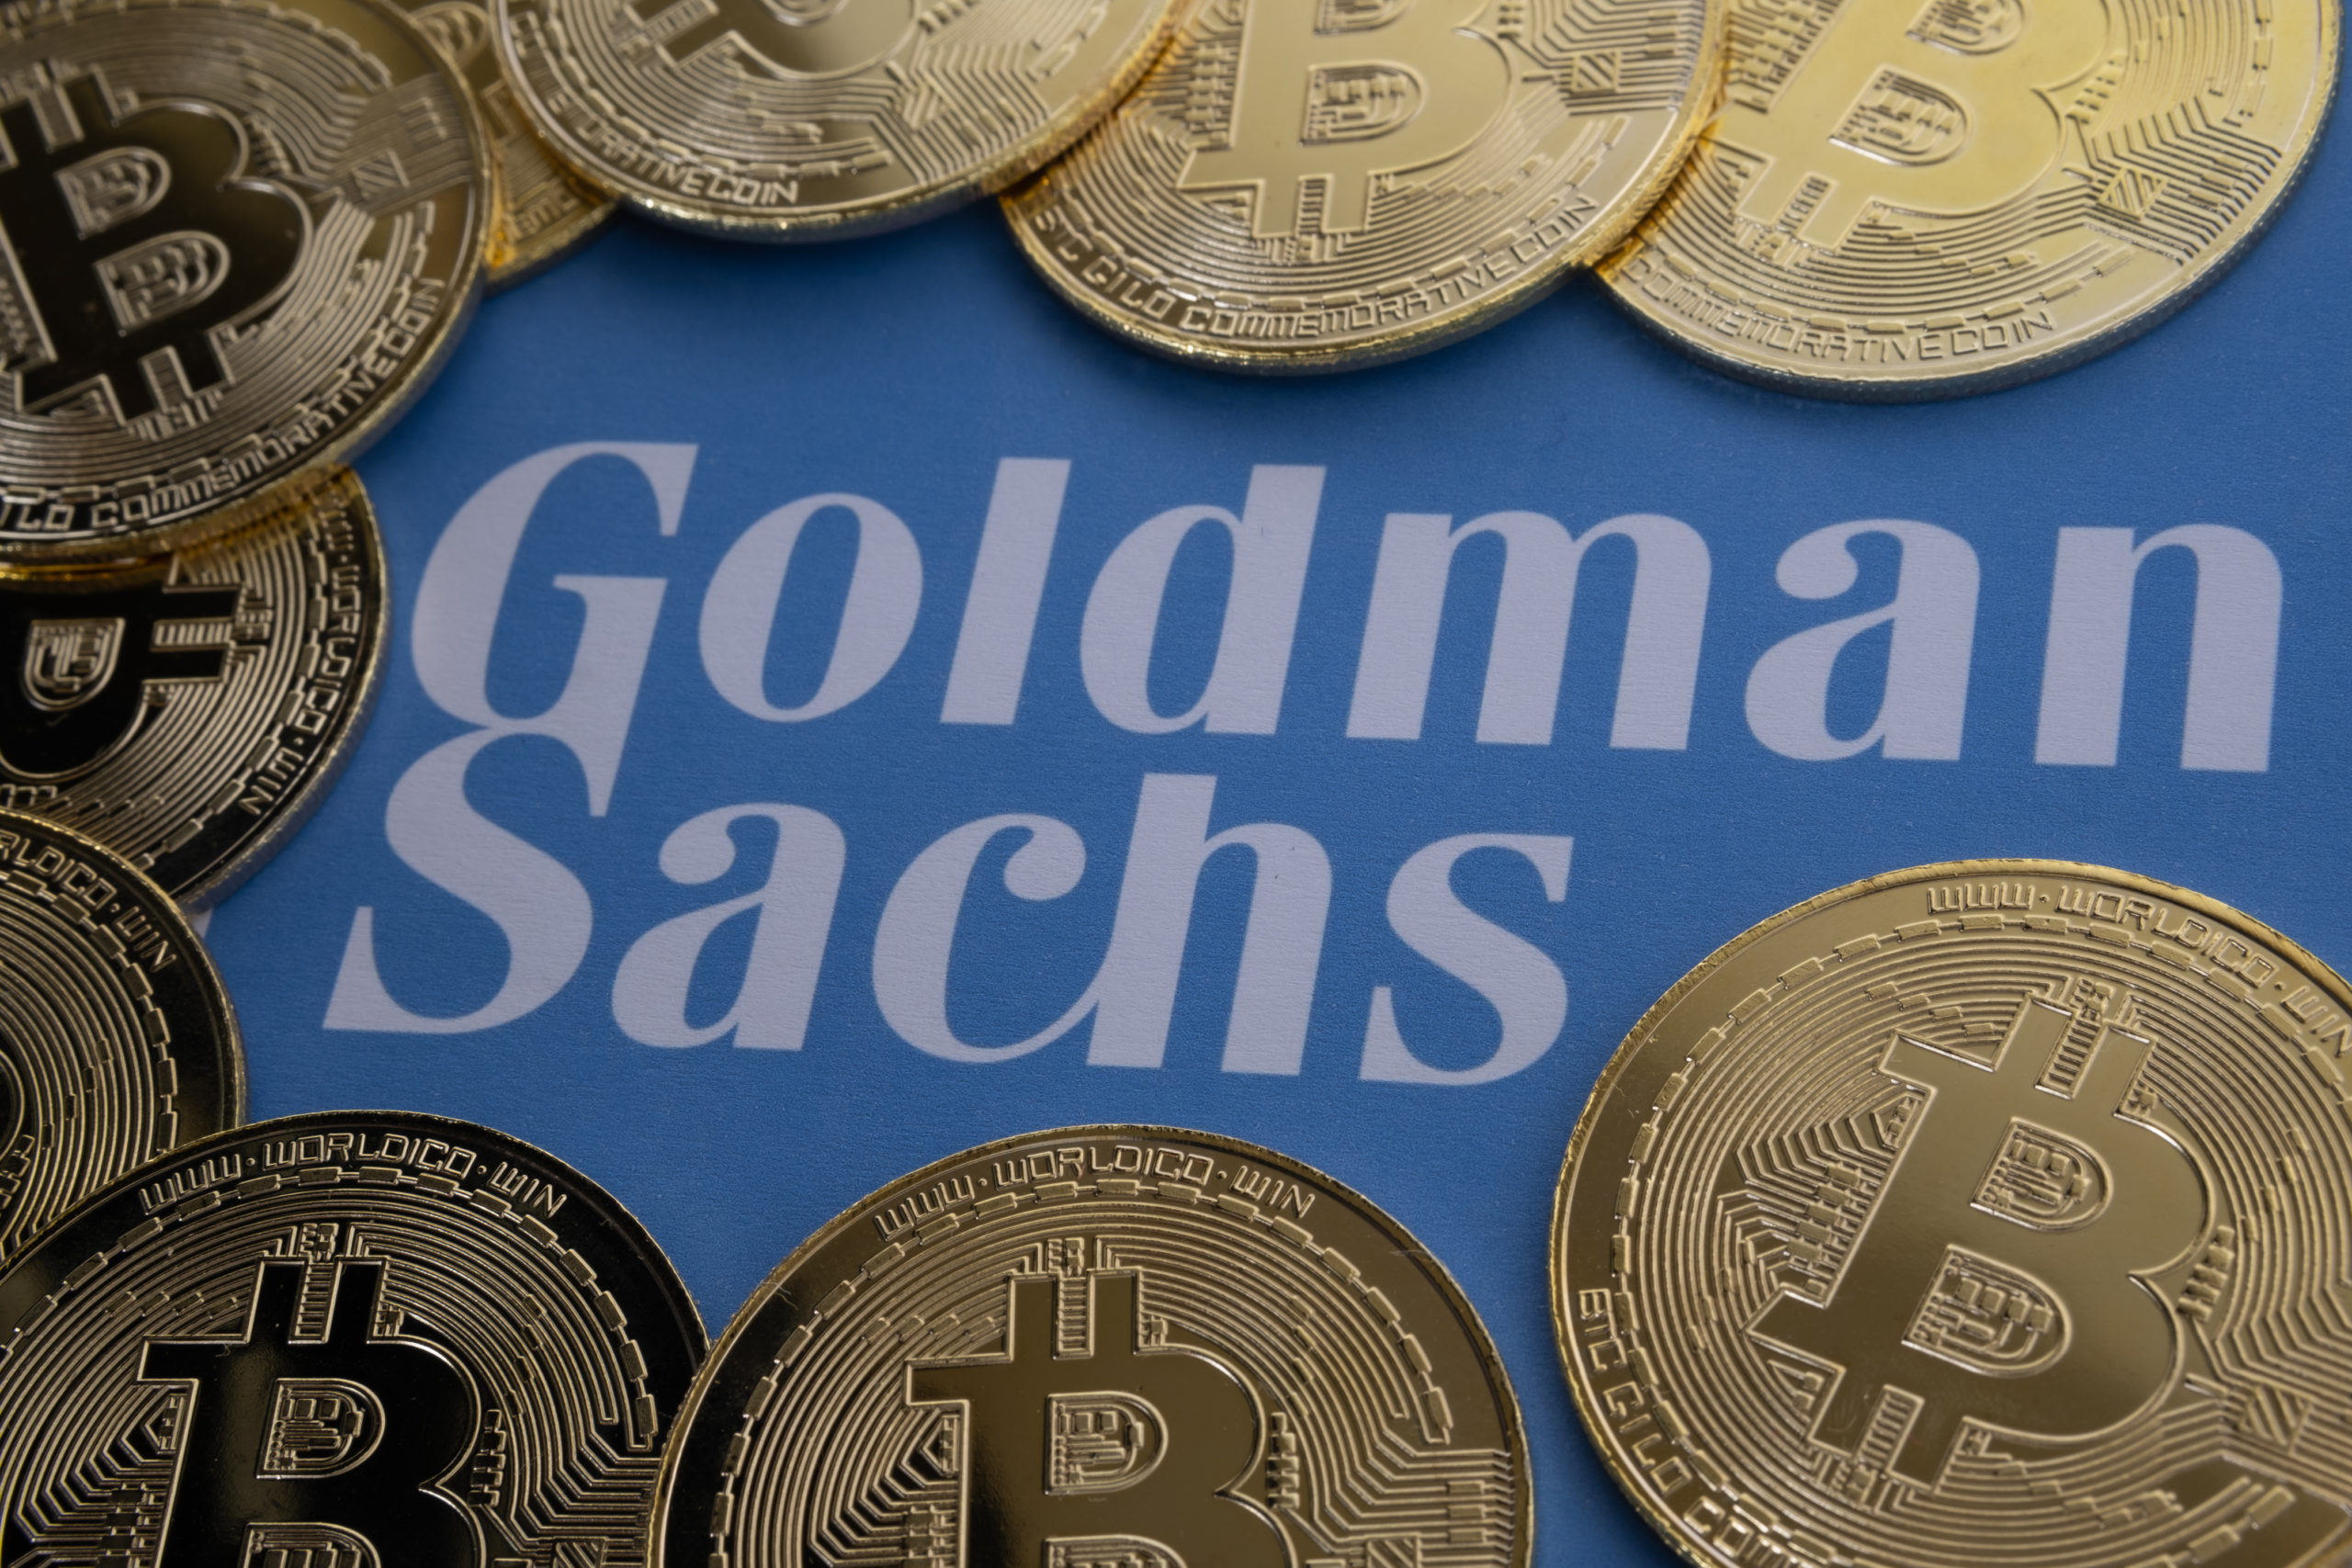 Goldman Sachs executes first Bitcoin futures trade in Asia